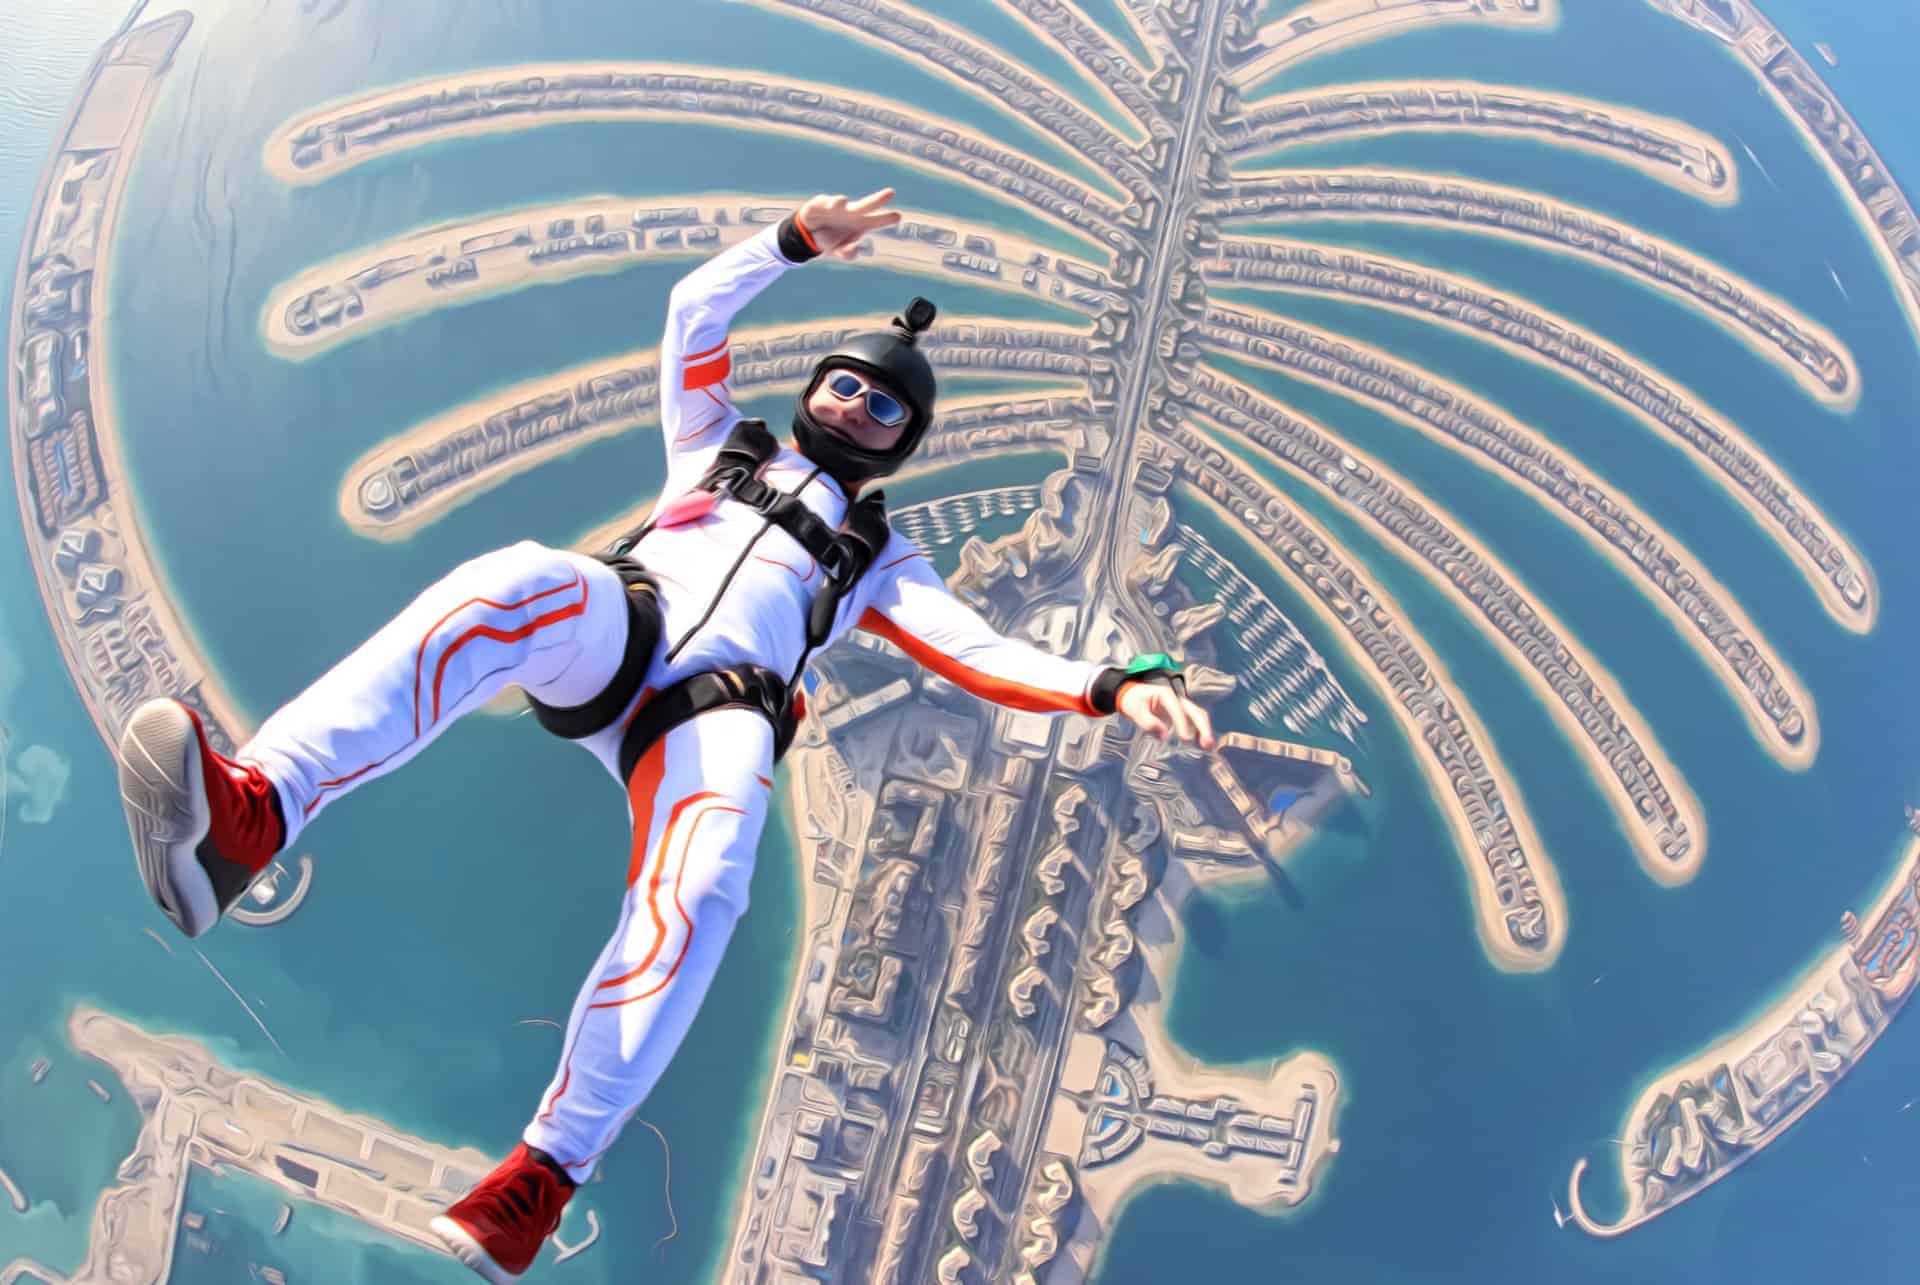 skydiving in dubai insurance